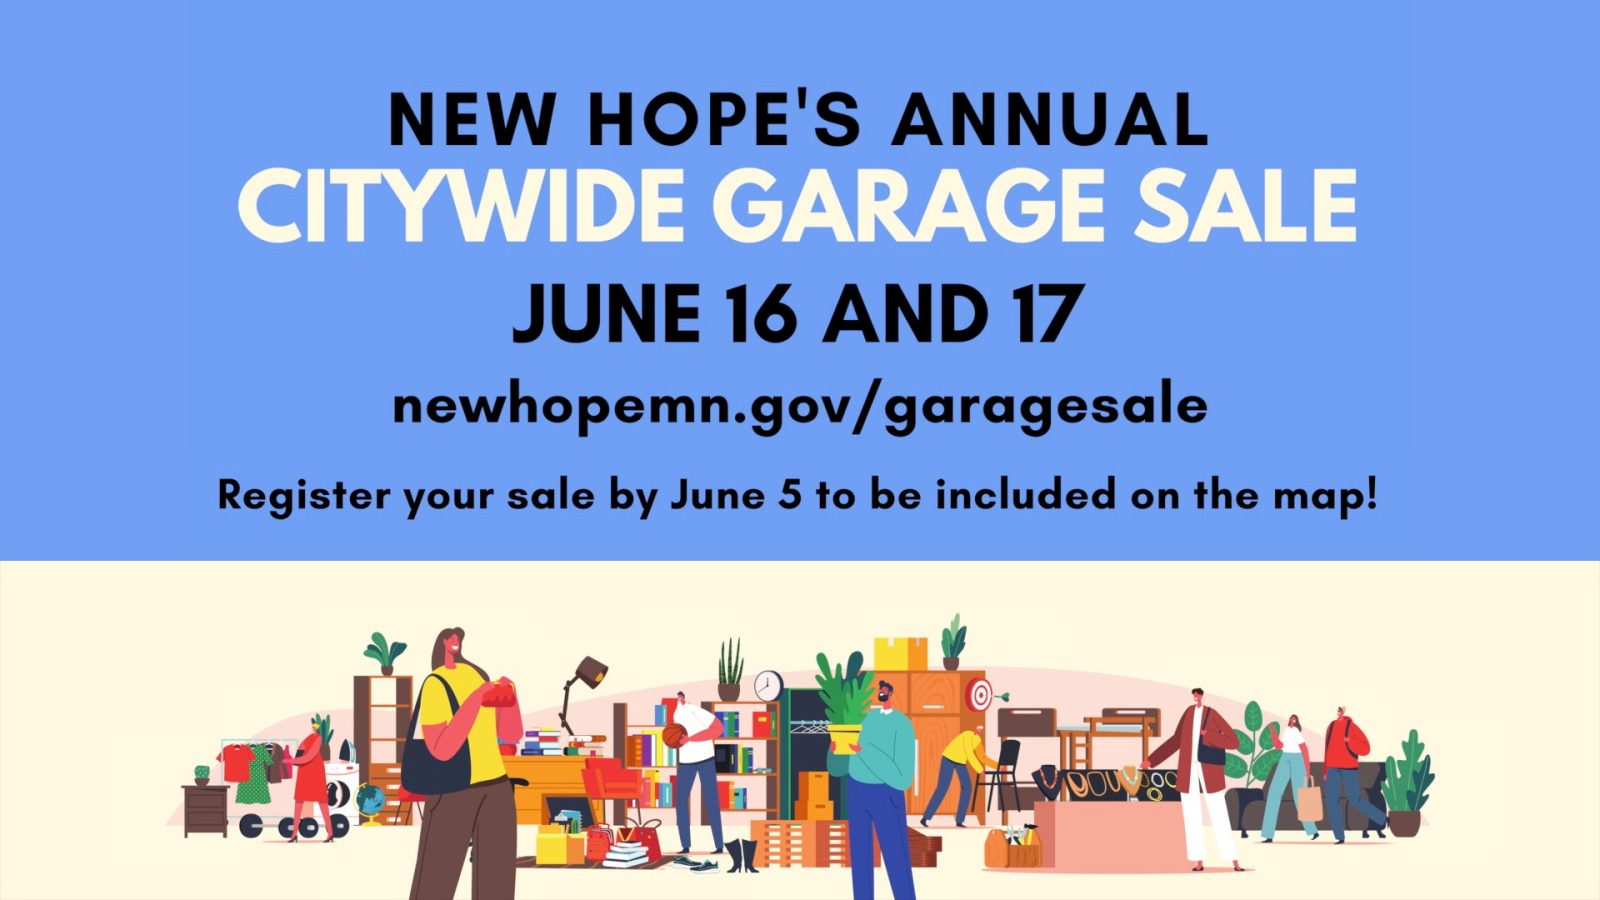 New Hope Citywide Garage Sale date information